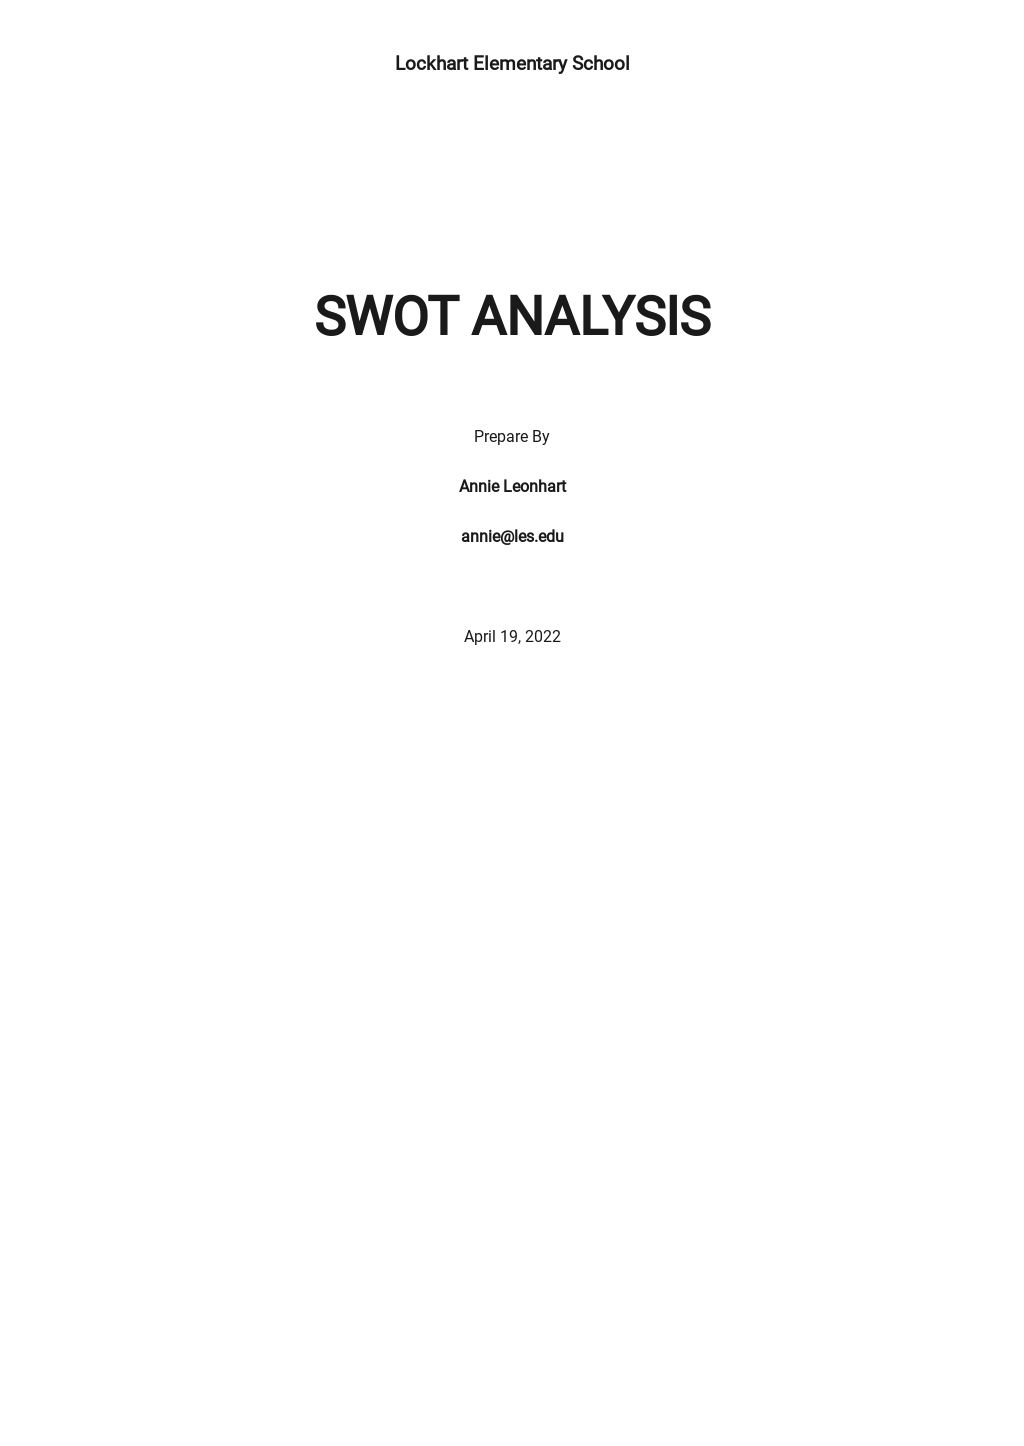 Free Sample School Swot Analysis Template.jpe